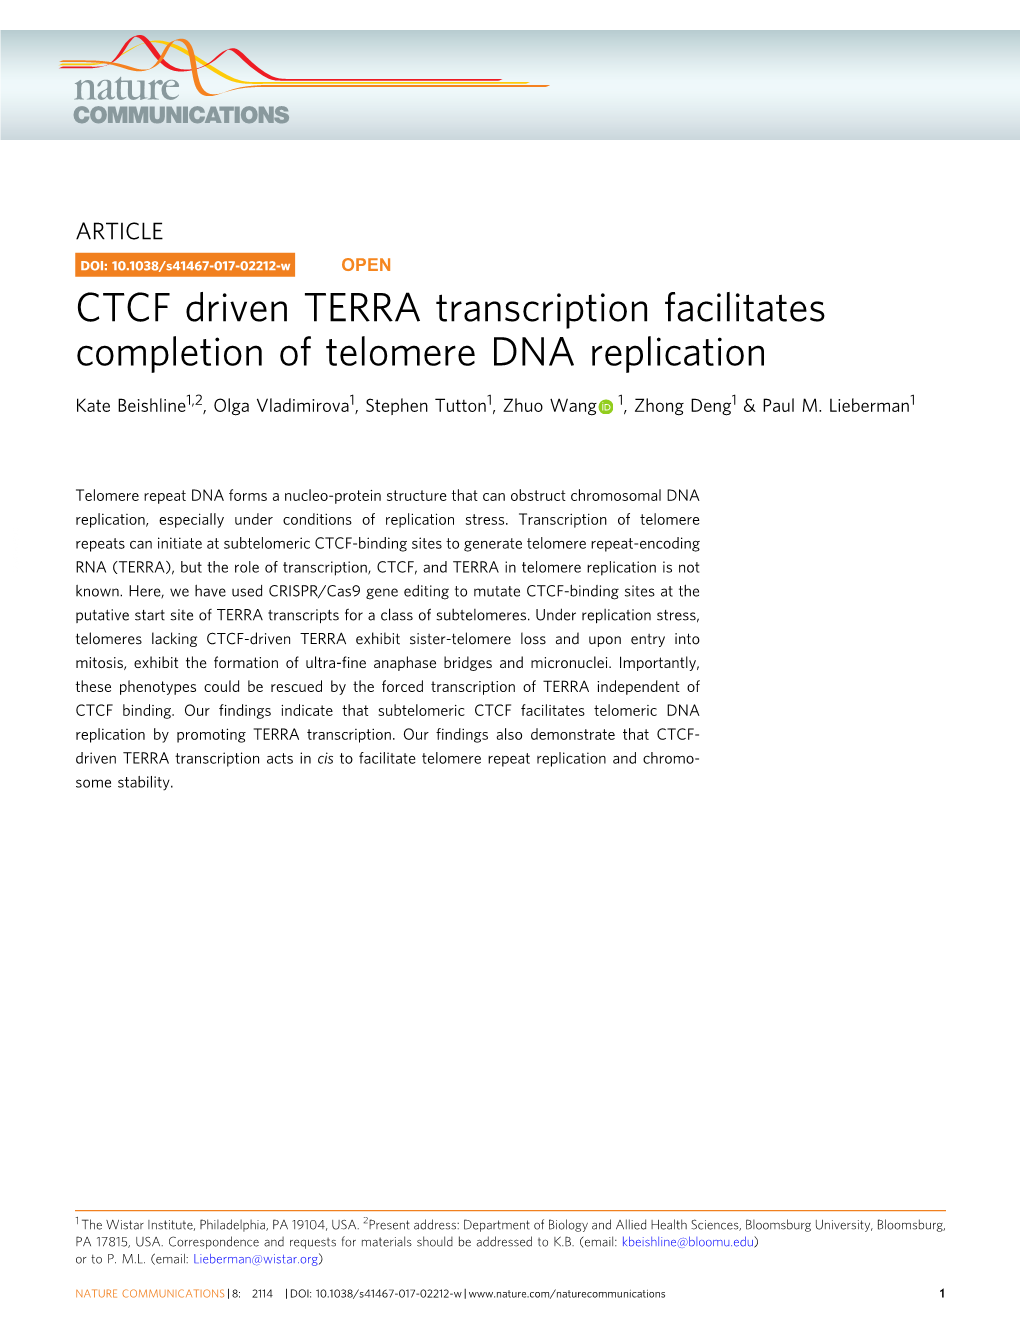 CTCF Driven TERRA Transcription Facilitates Completion of Telomere DNA Replication